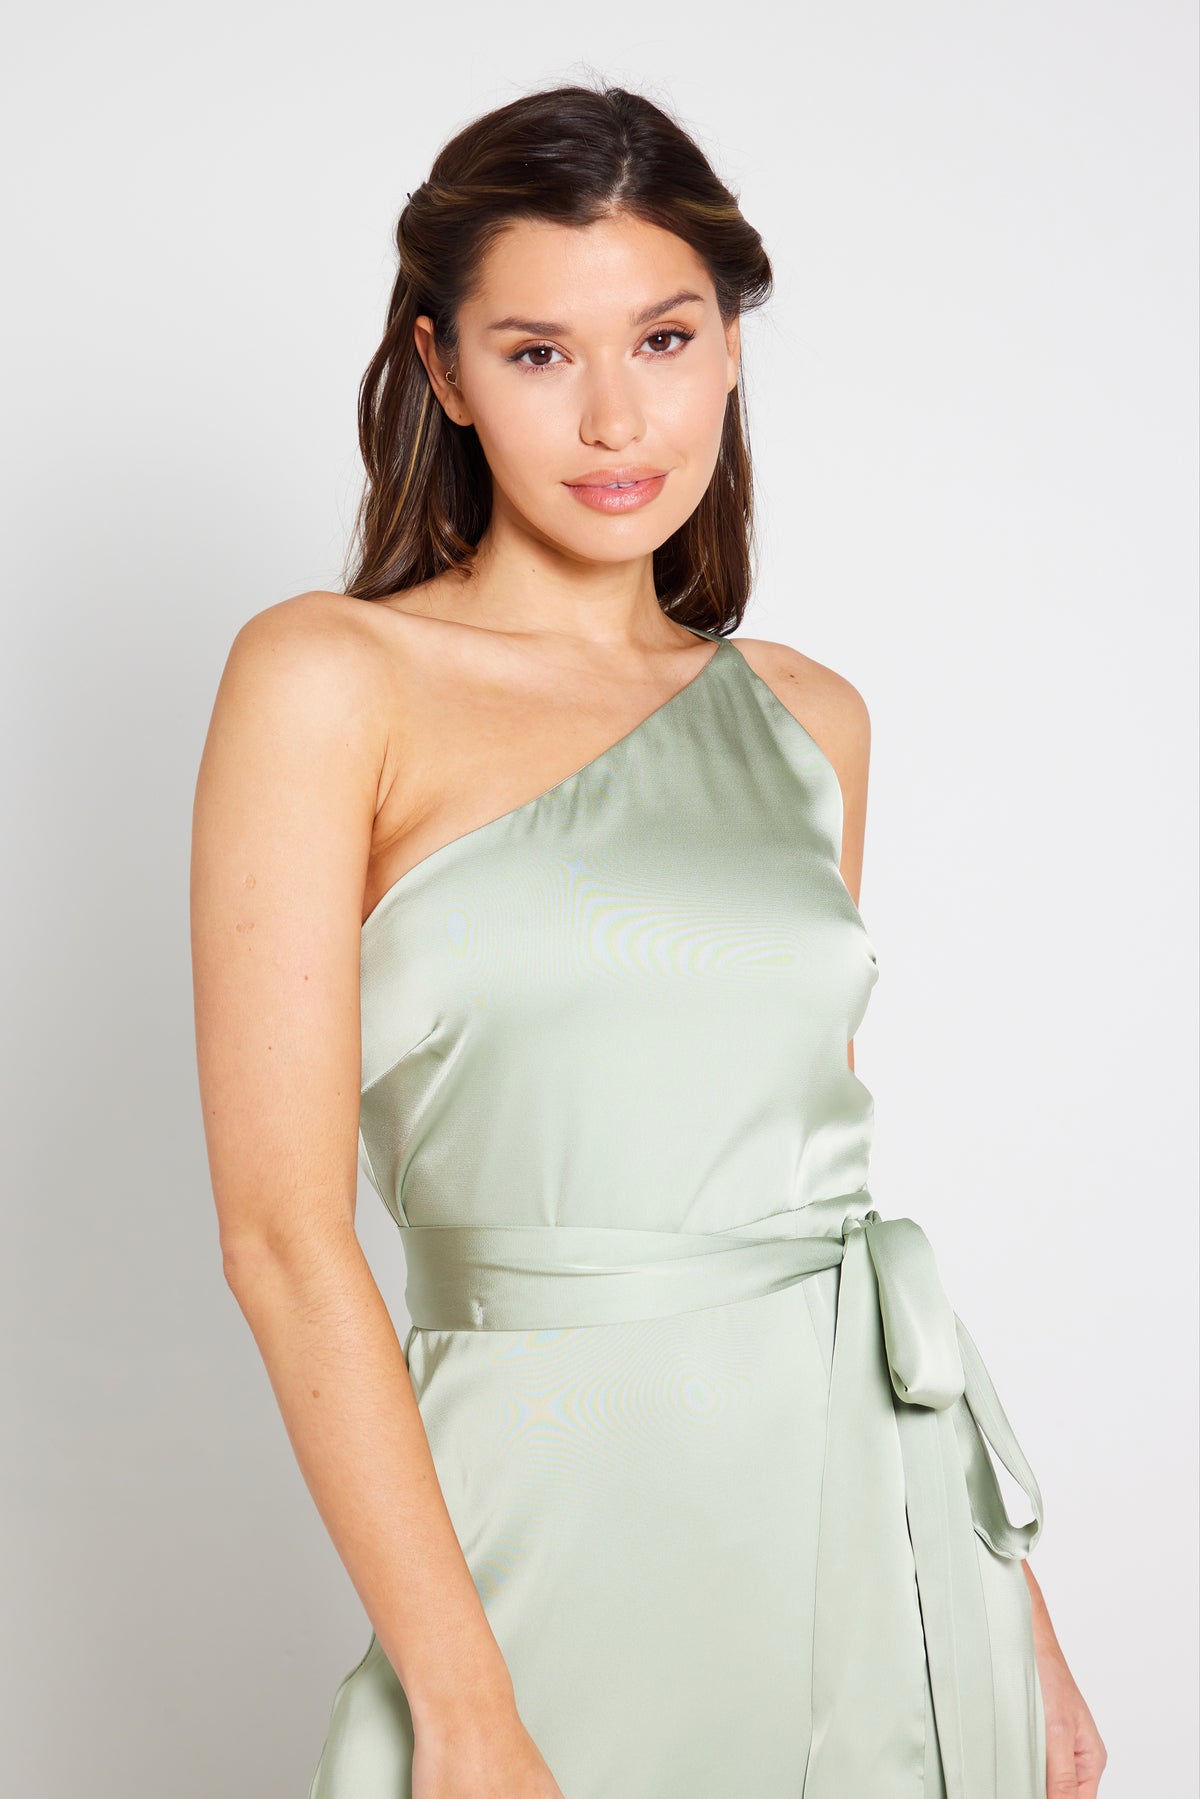 Aria One Shoulder Maxi Dress - Sage Green